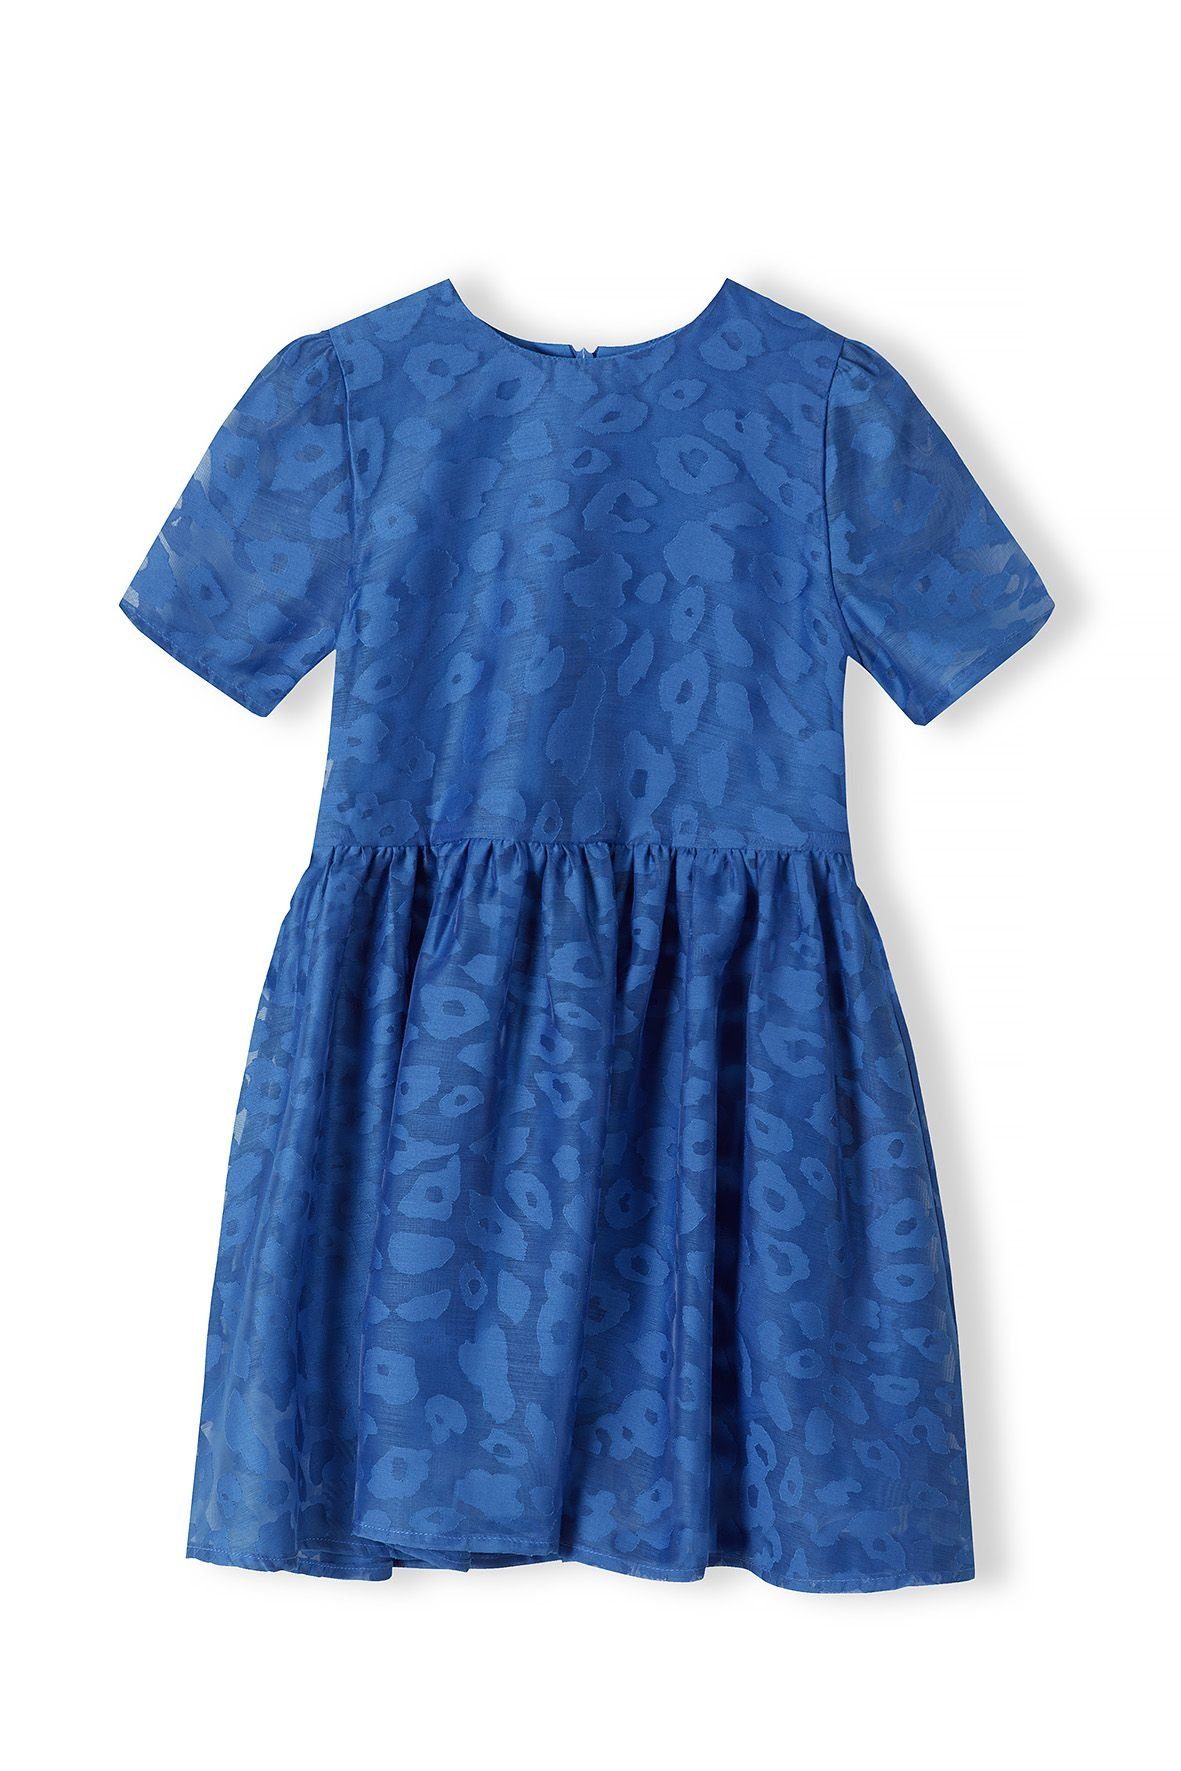 MINOTI Partykleid mit Jacquard-Muster(3-14y) Blau